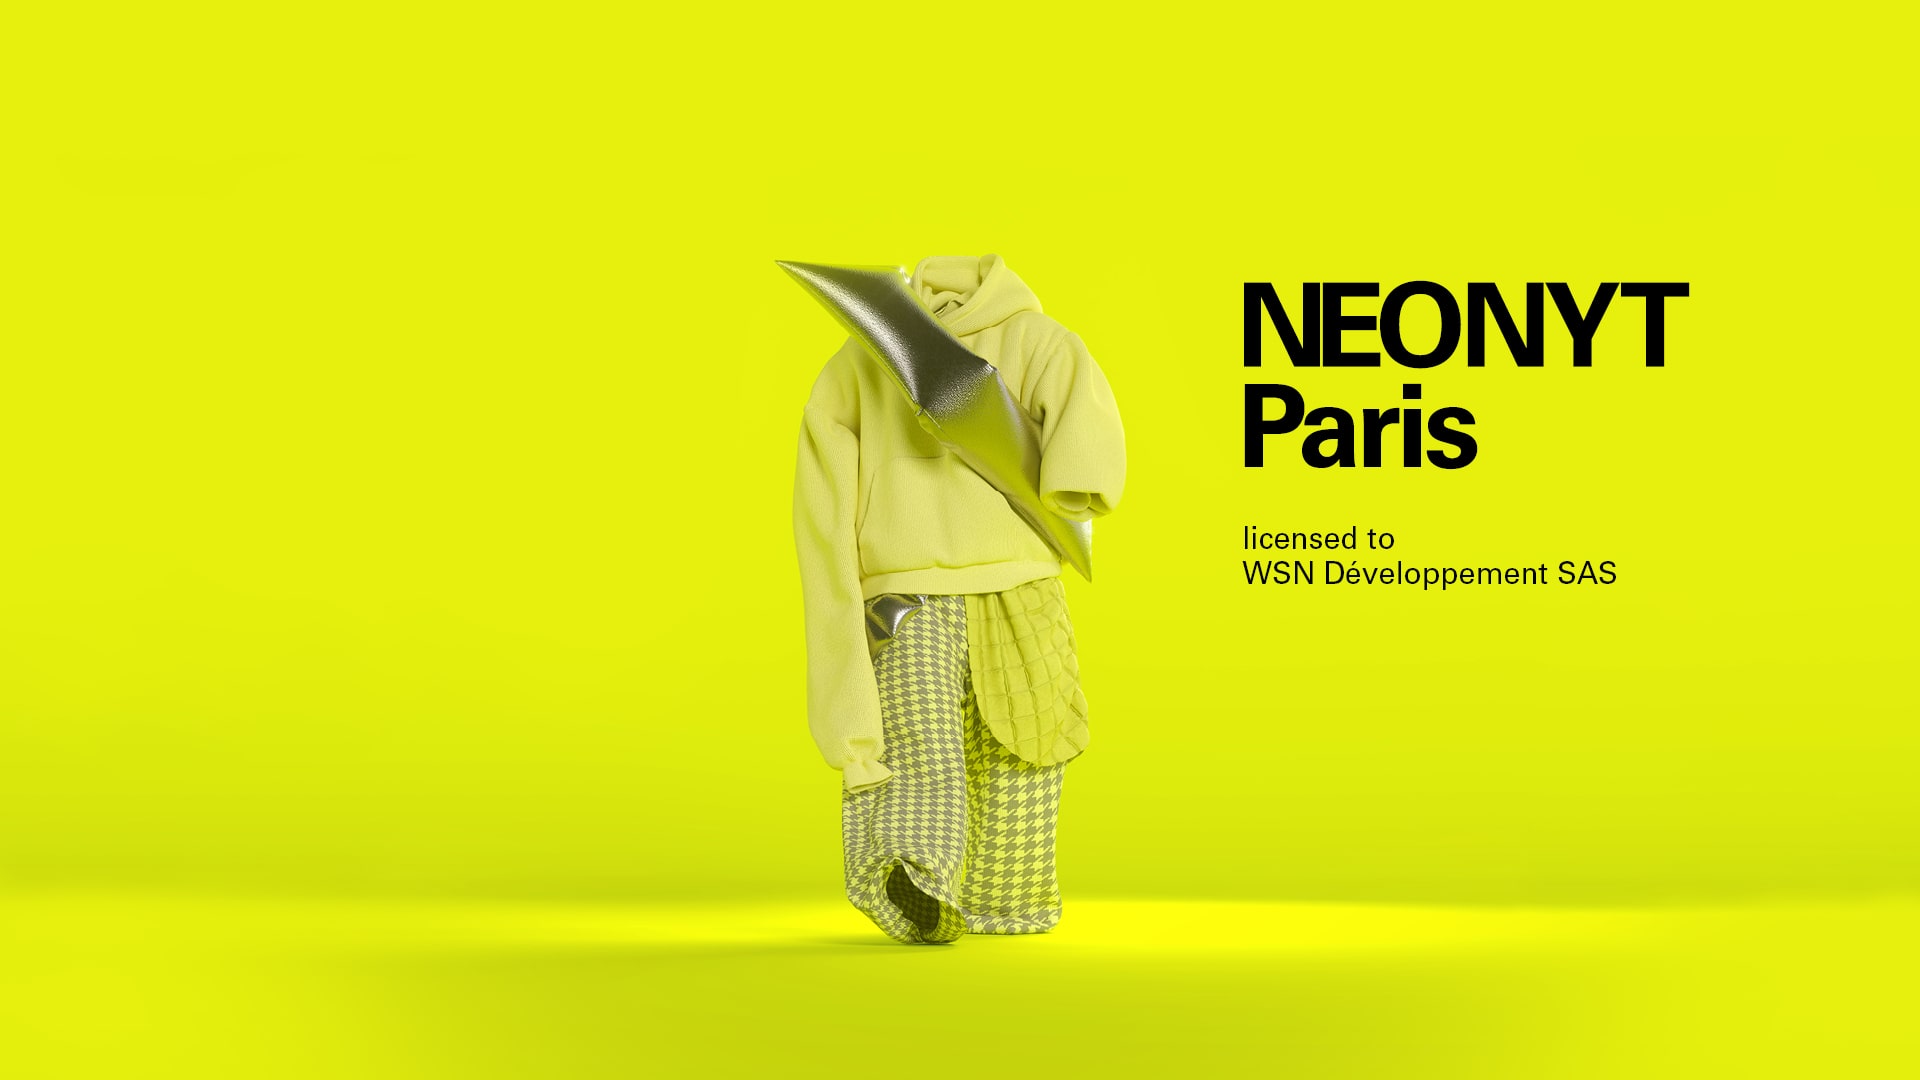 Neonyt Paris